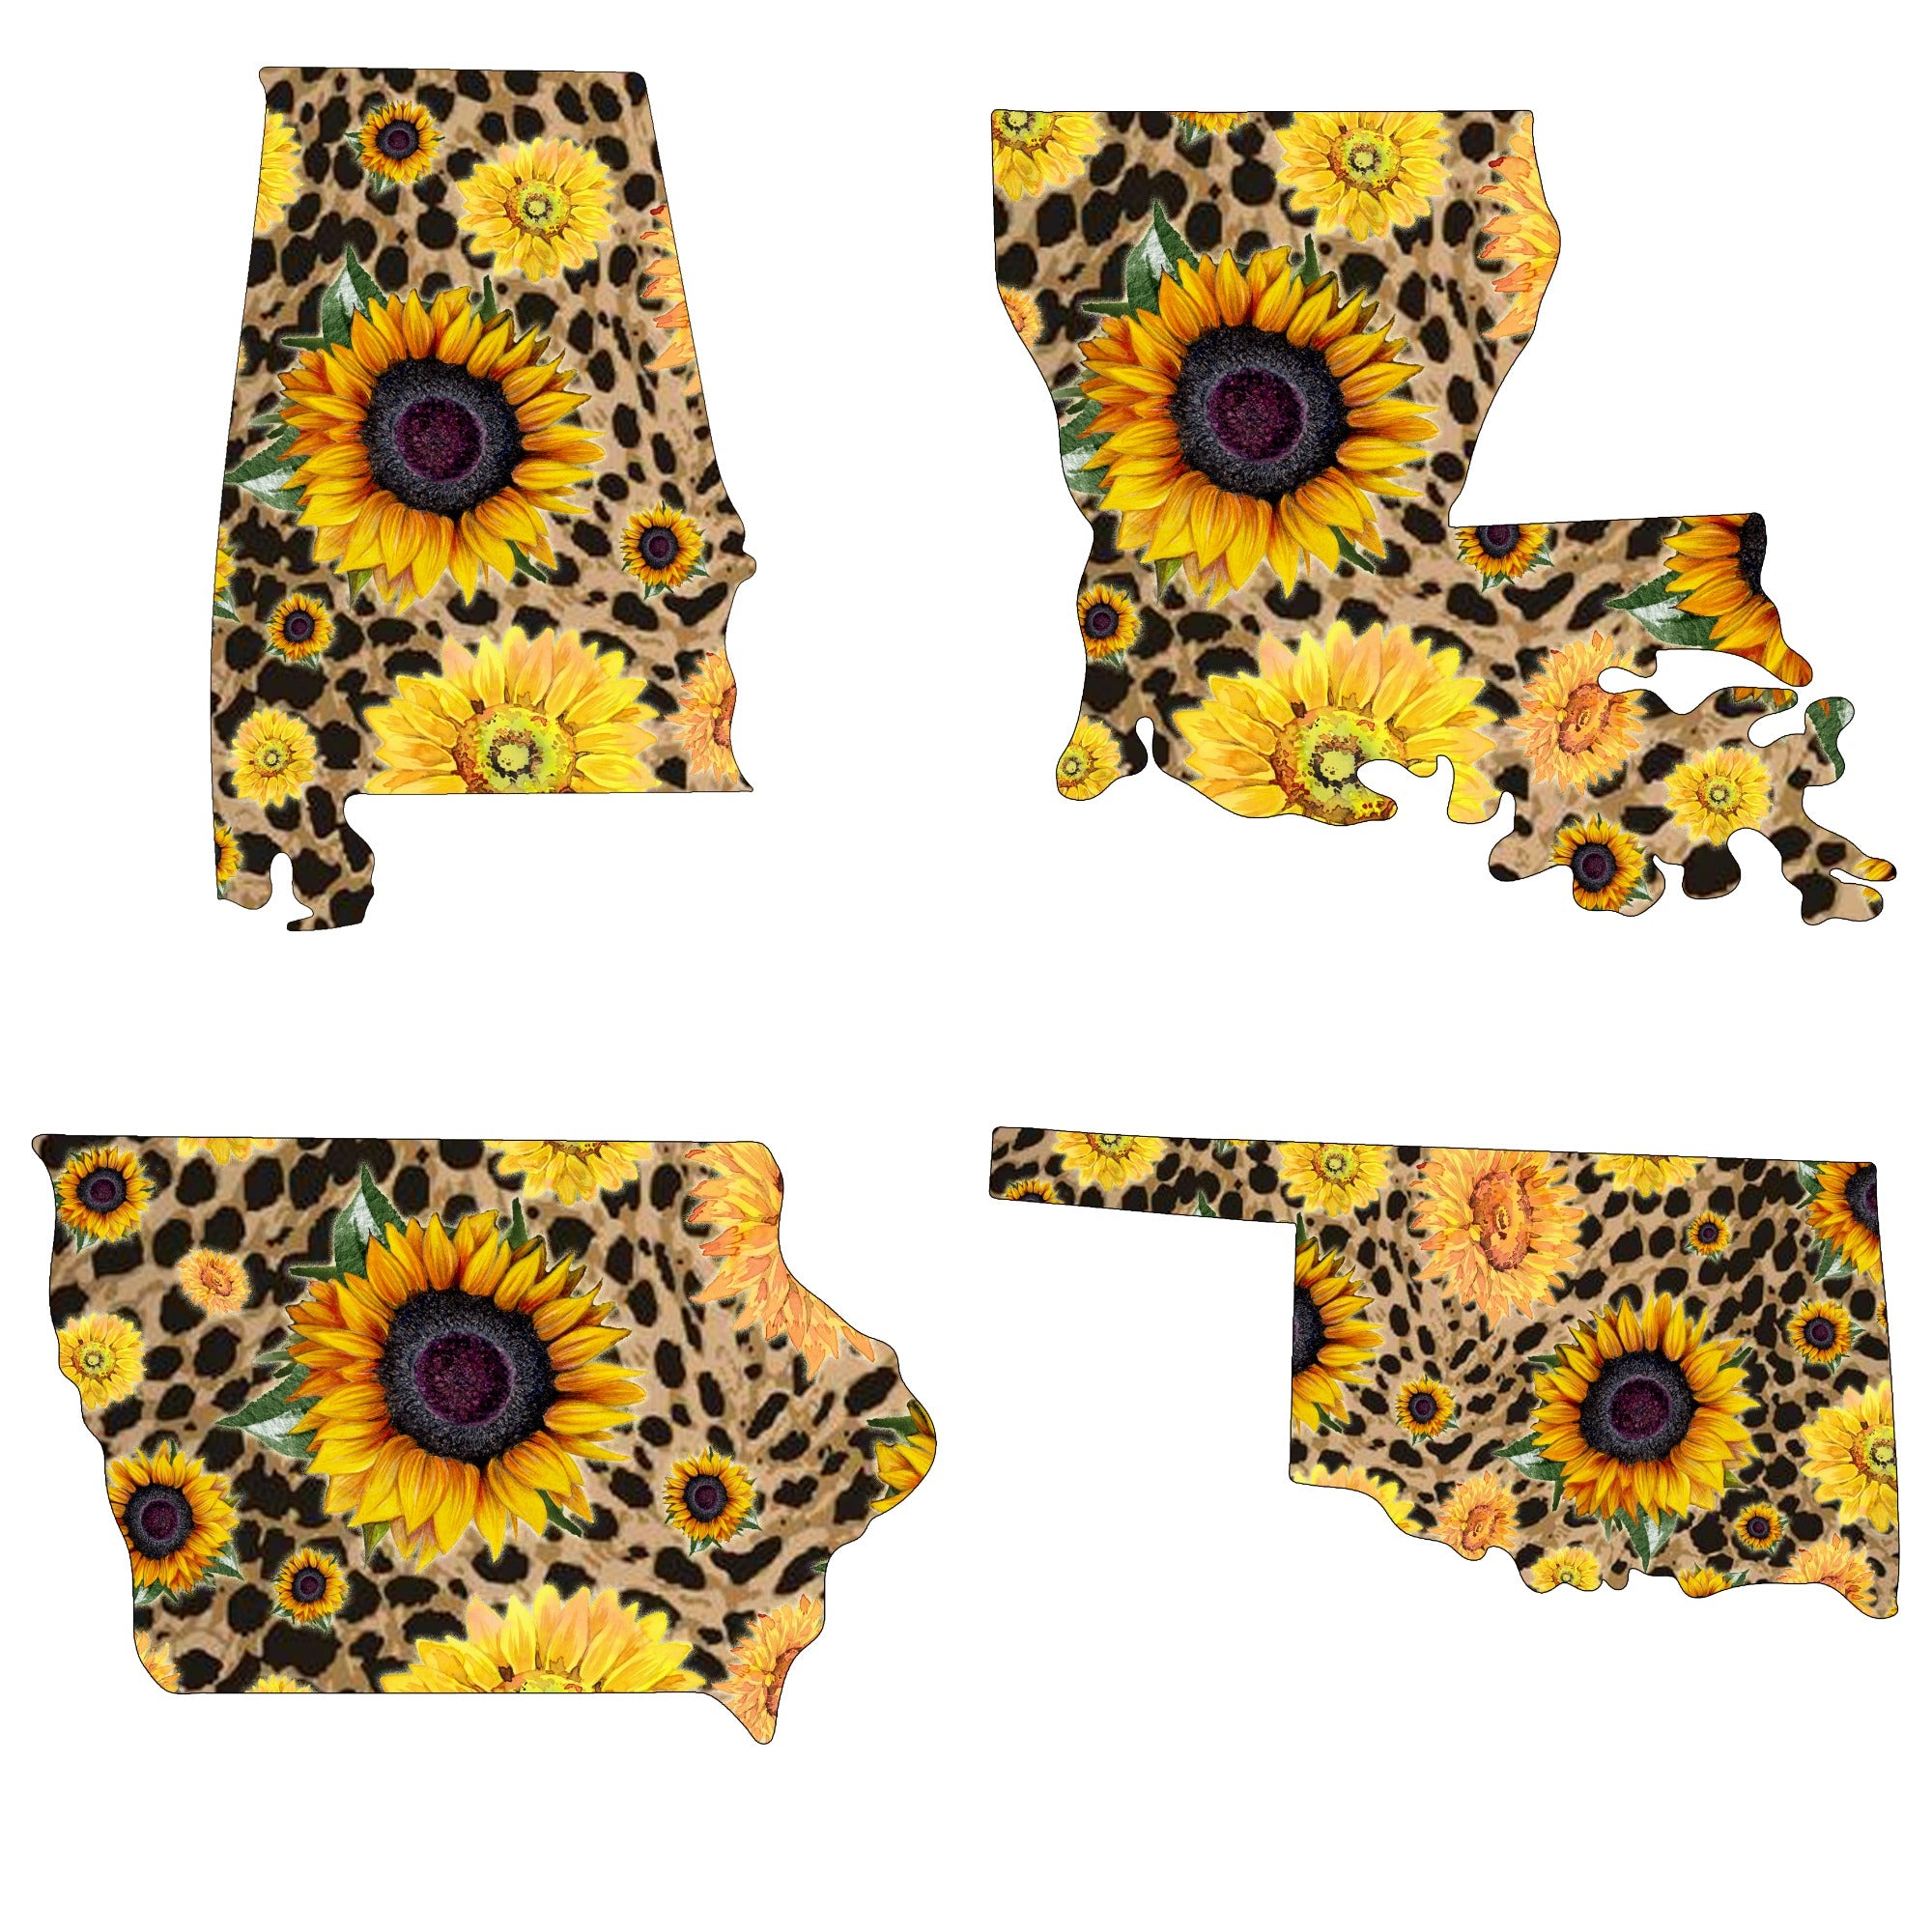 State Sunflower Short Sleeve Tees